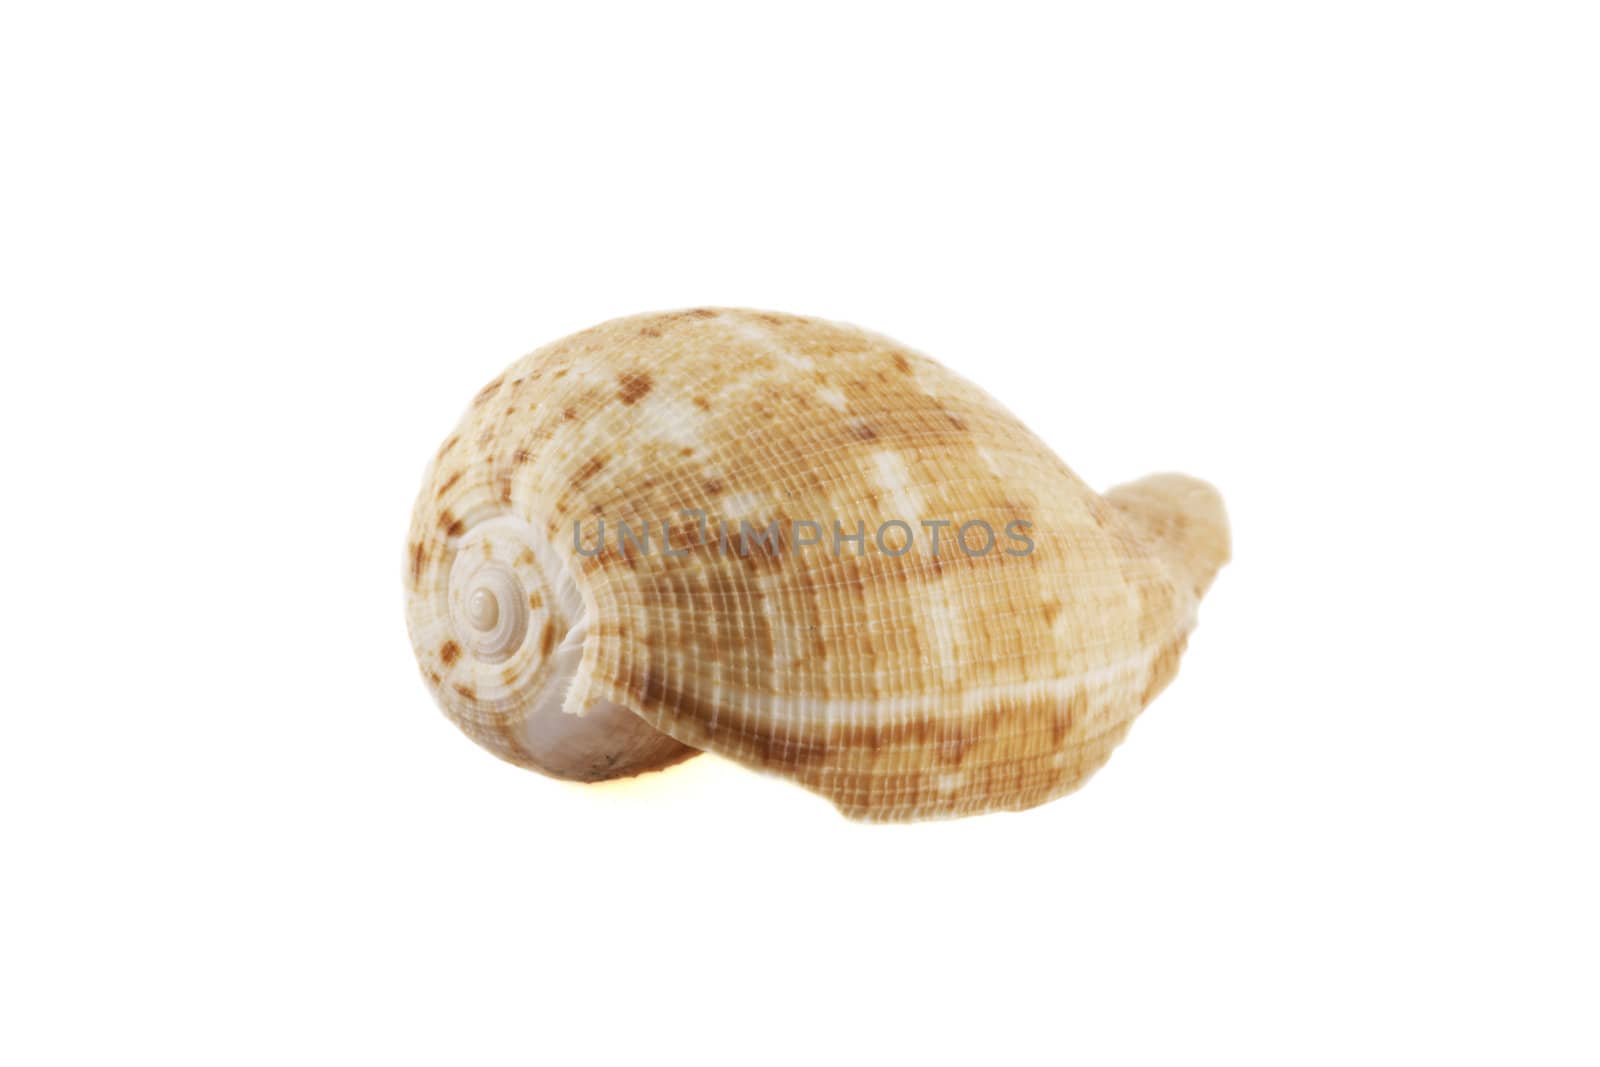 Seashell over white isolated background